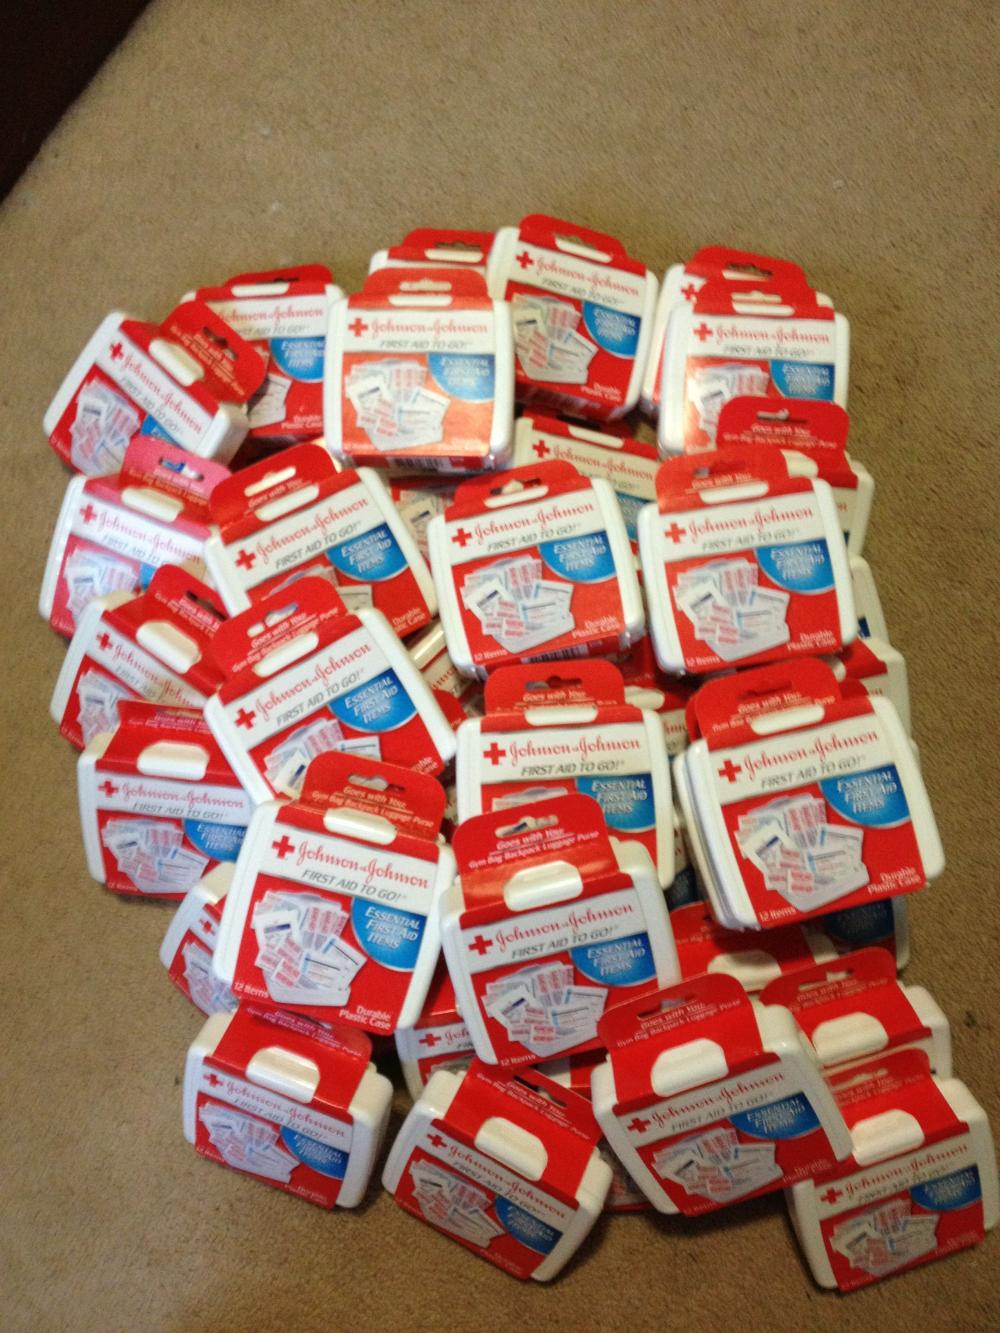 44 Johnson & Johnson First Aid Kits to go!